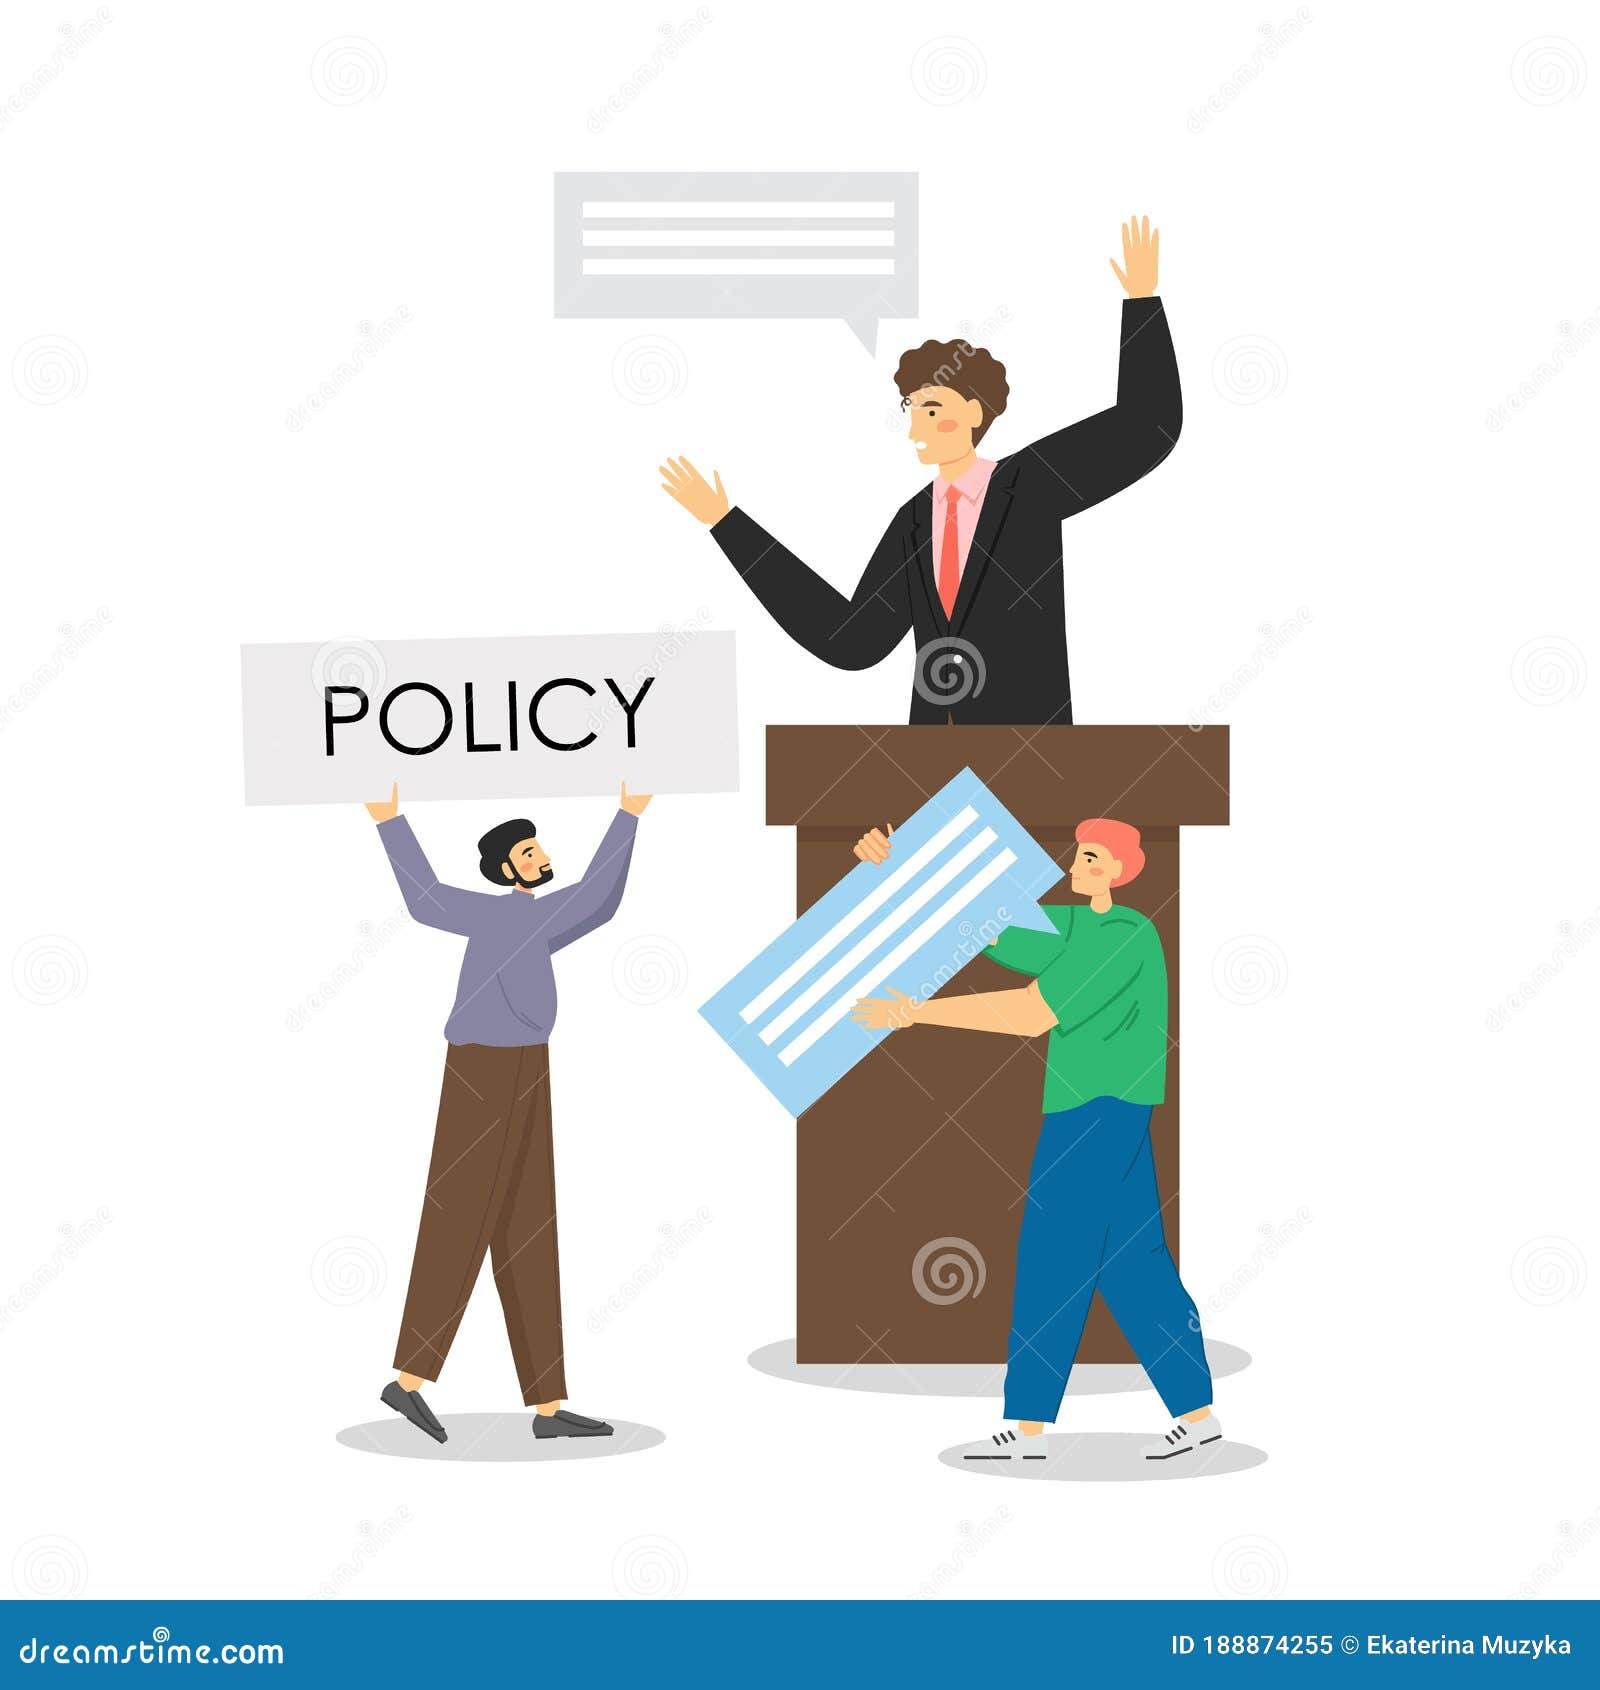 policy speech